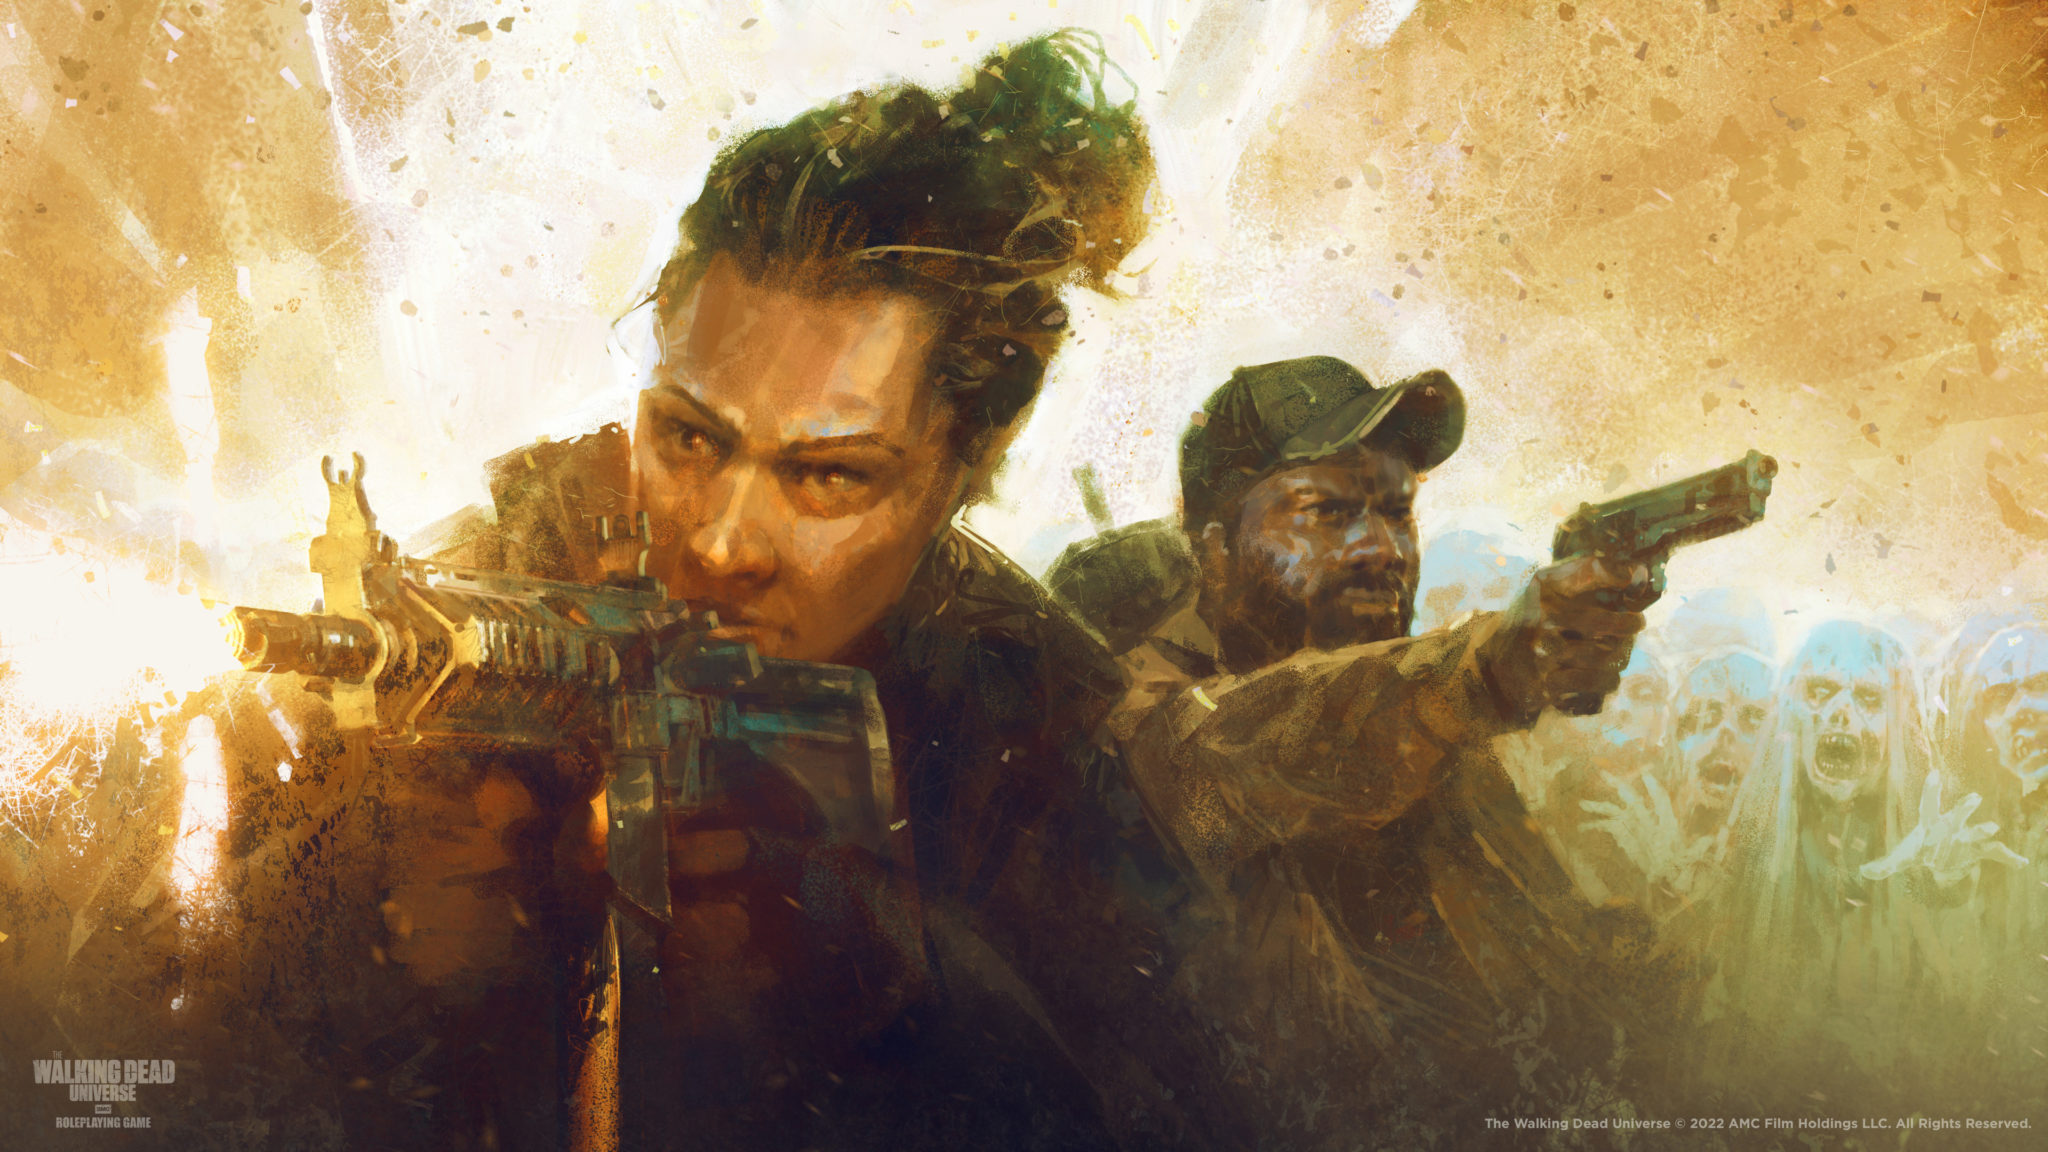 The Walking Dead TTRPG Book art